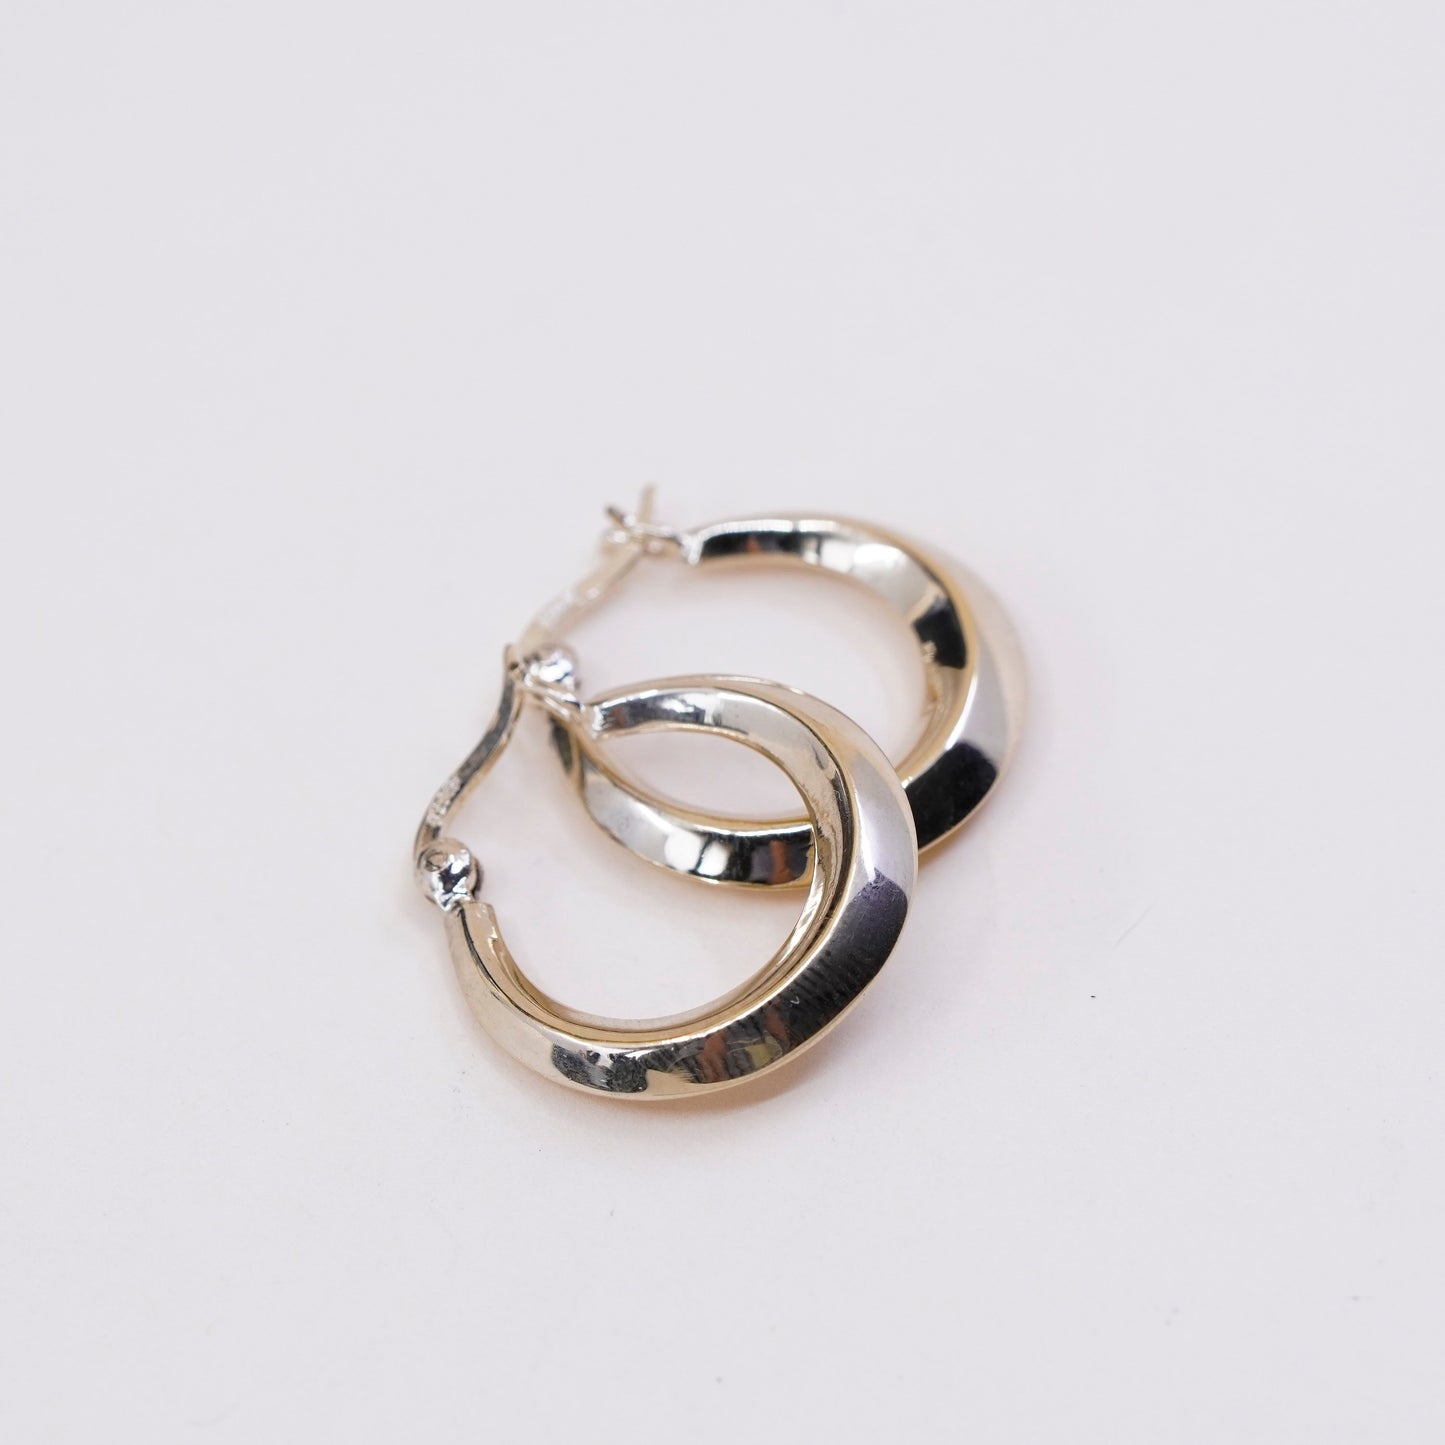 0.75”, vermeil gold over sterling silver loop earrings, fashion minimalist